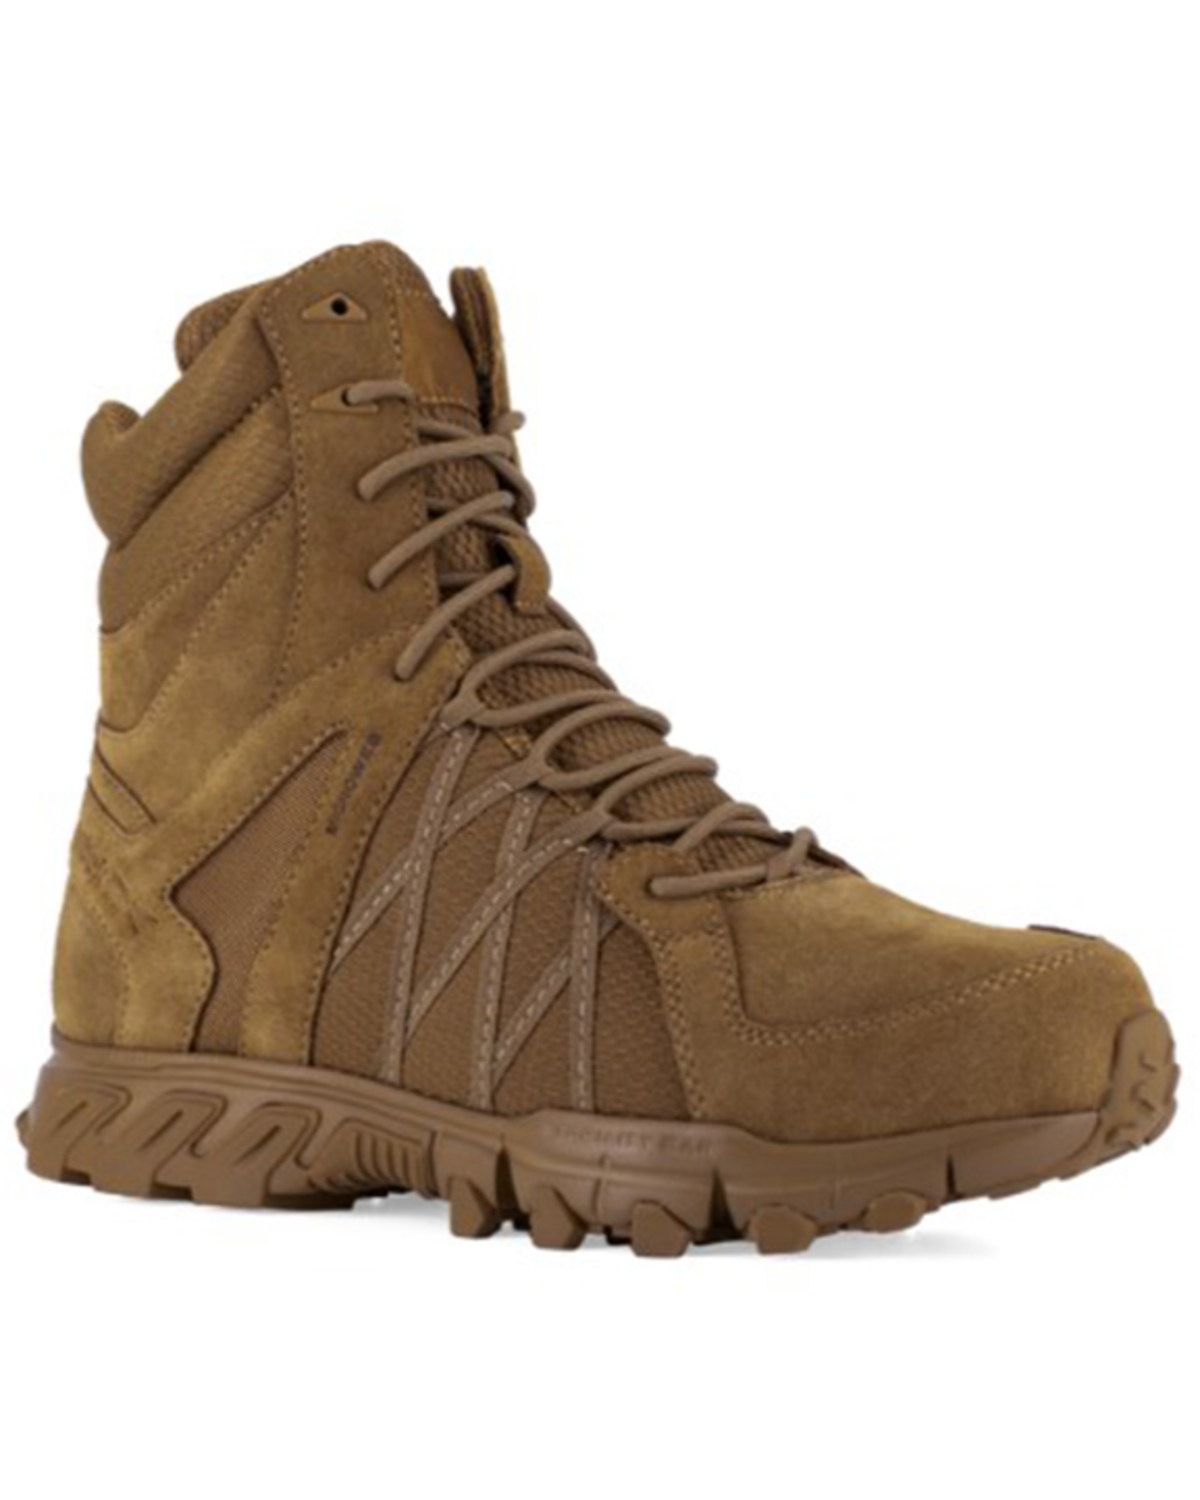 Reebok Men's Trailgrip 8" Tactical Work Boots - Soft Toe